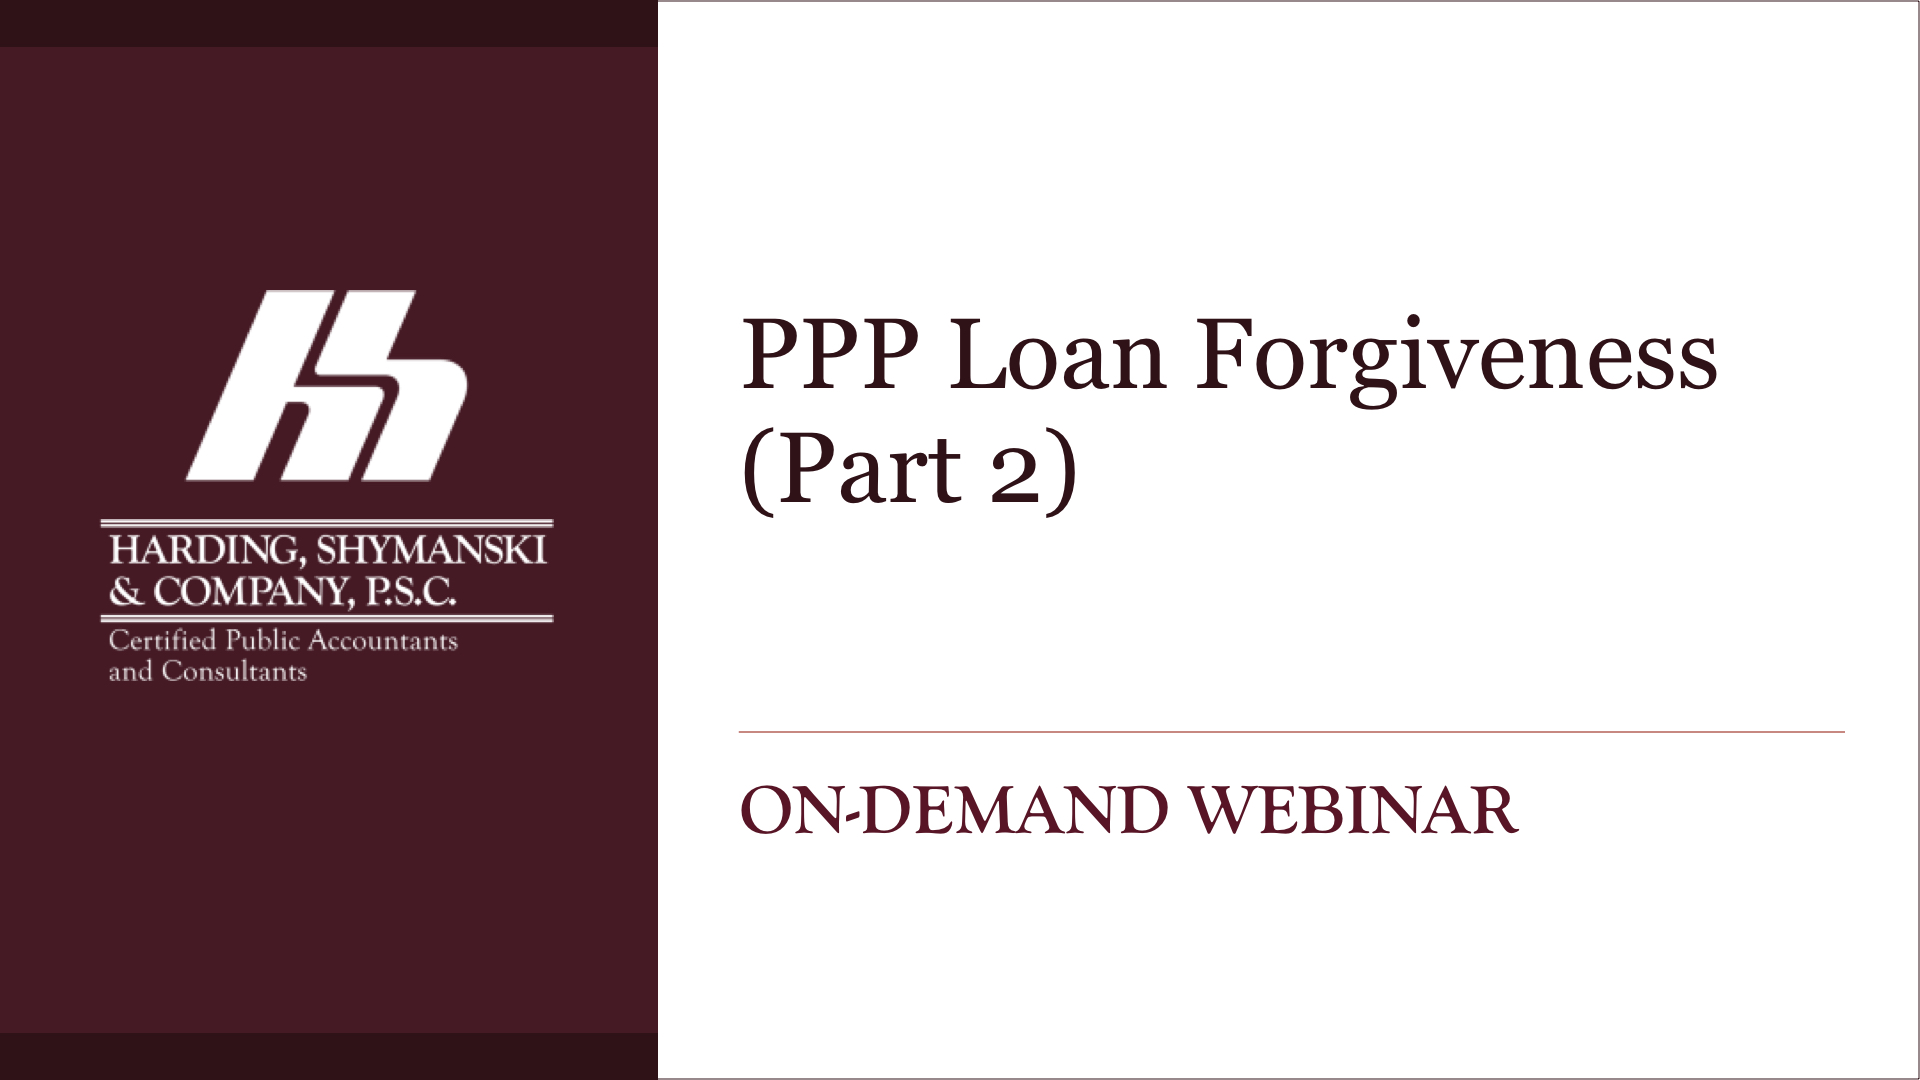 PPP Loan Forgiveness (Part 2)